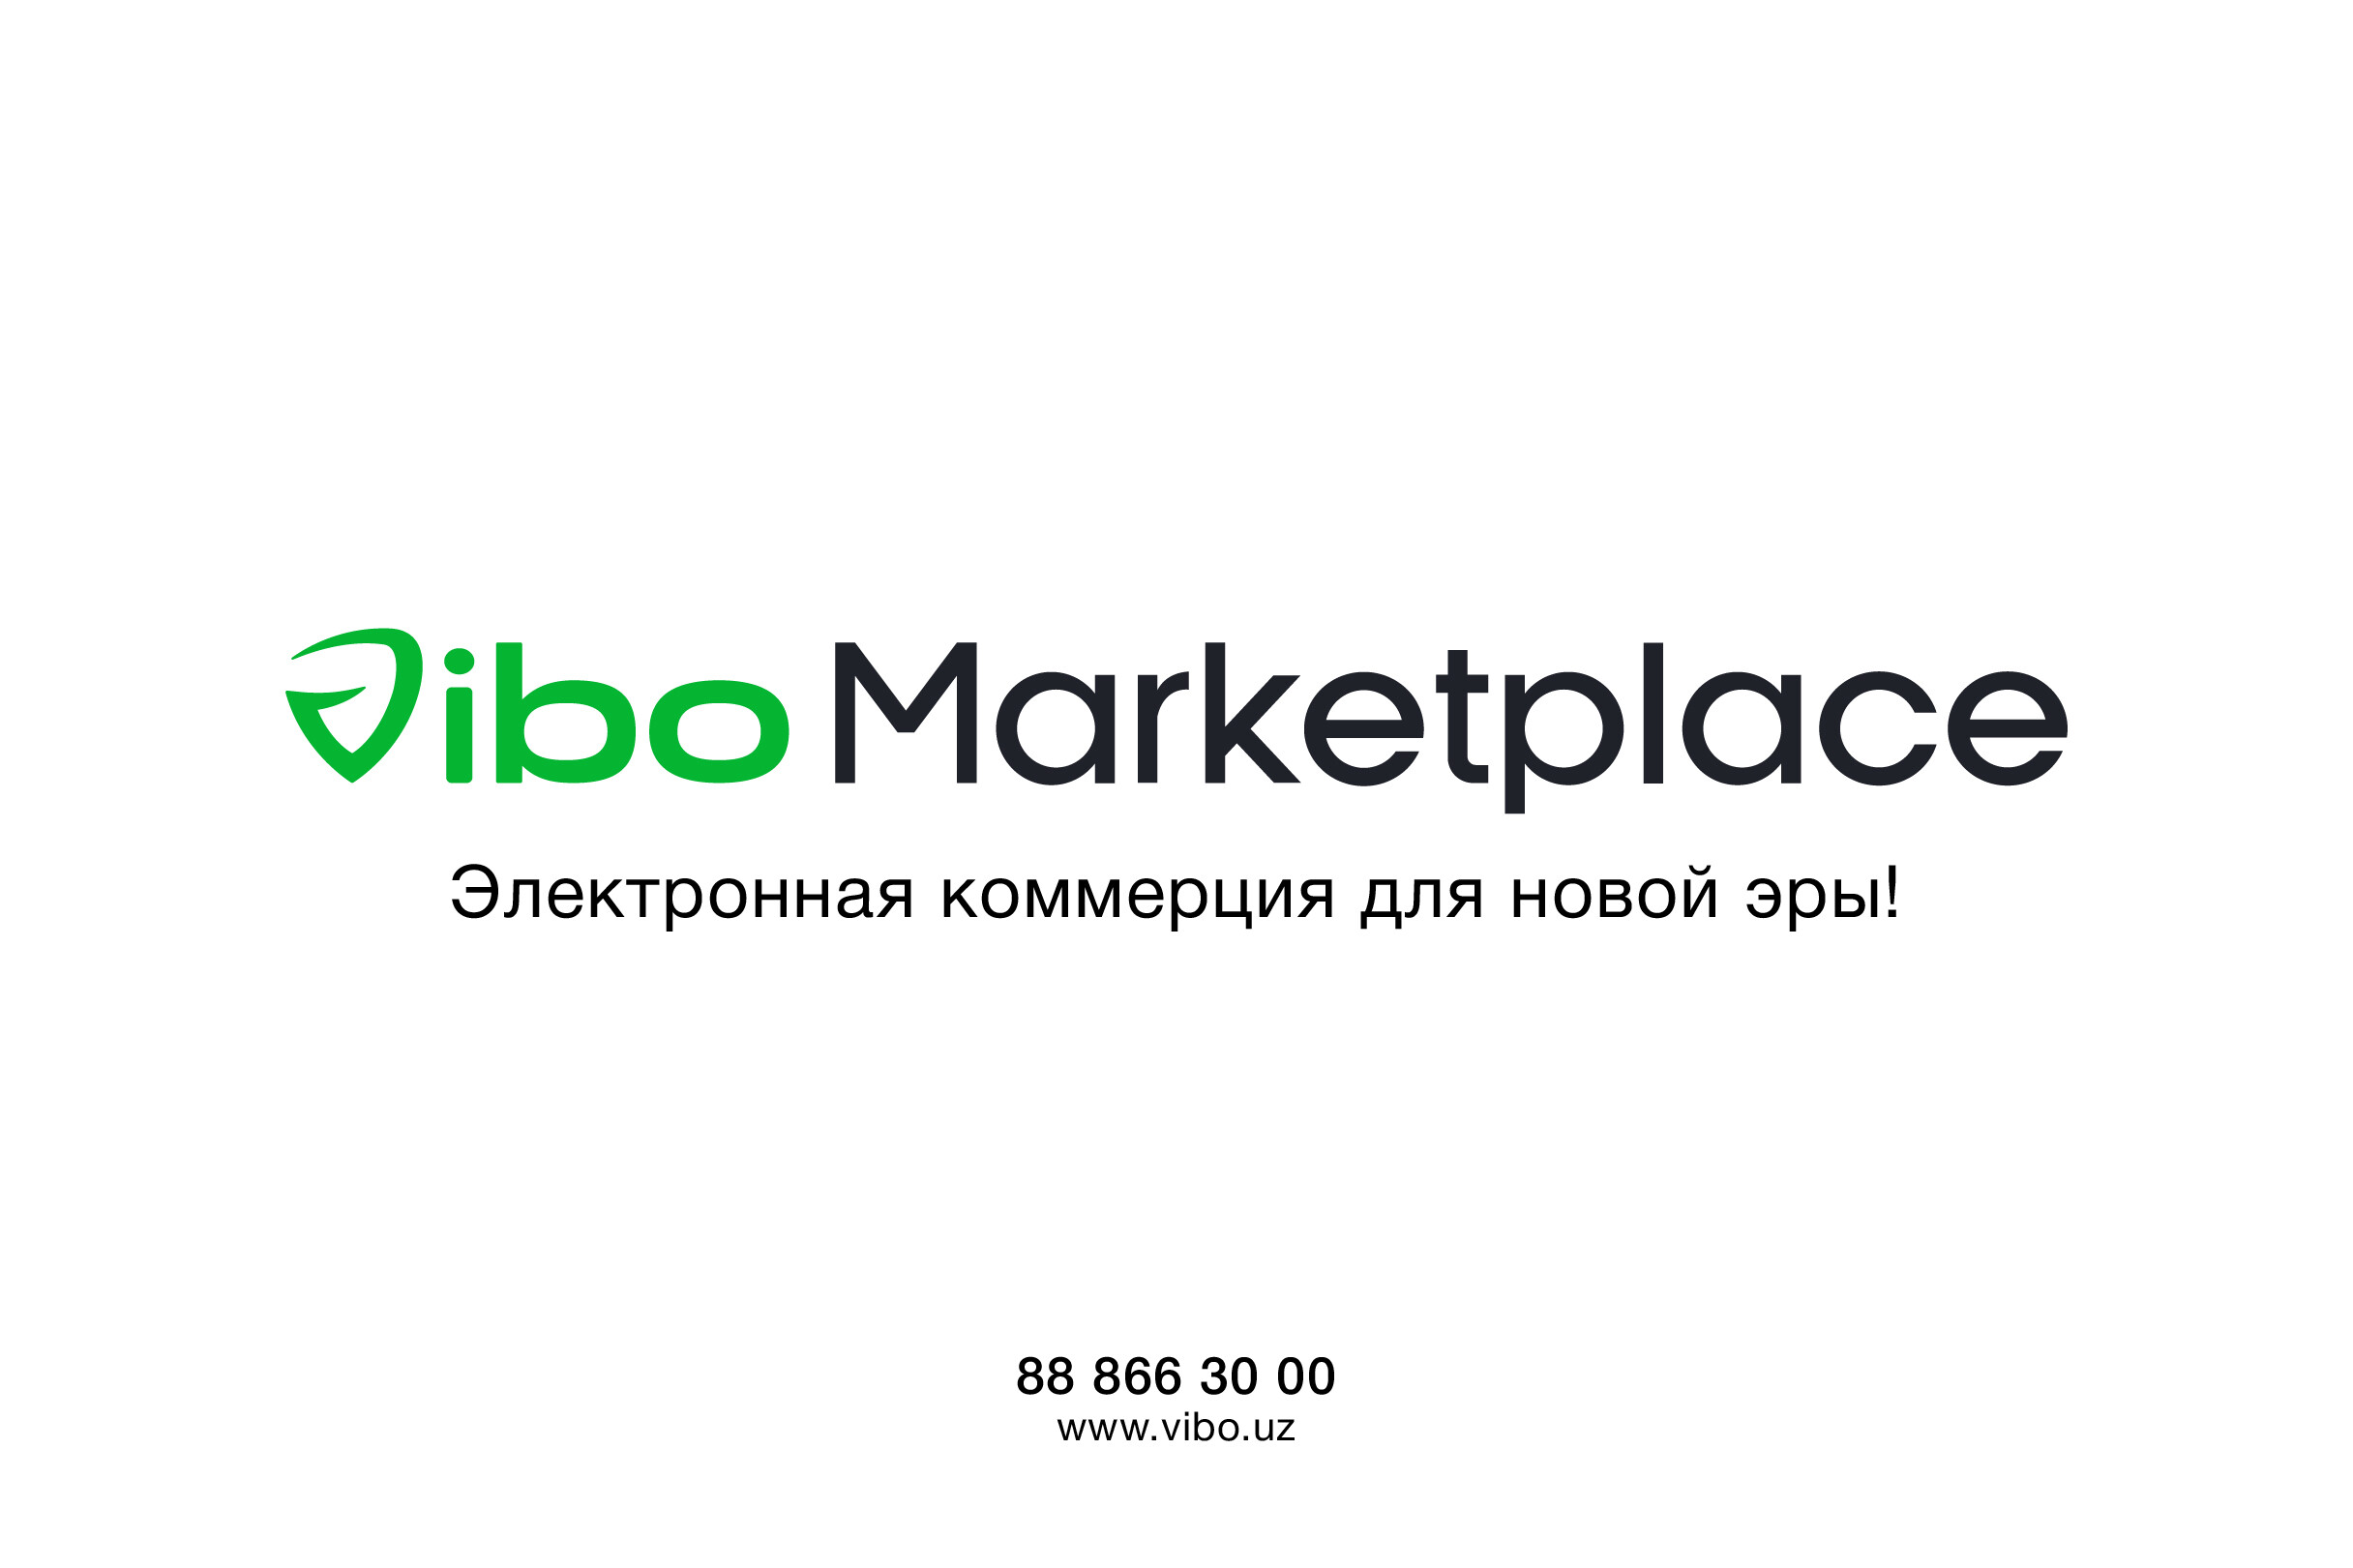 Vibo — маркетплейс нового формата в Узбекистане